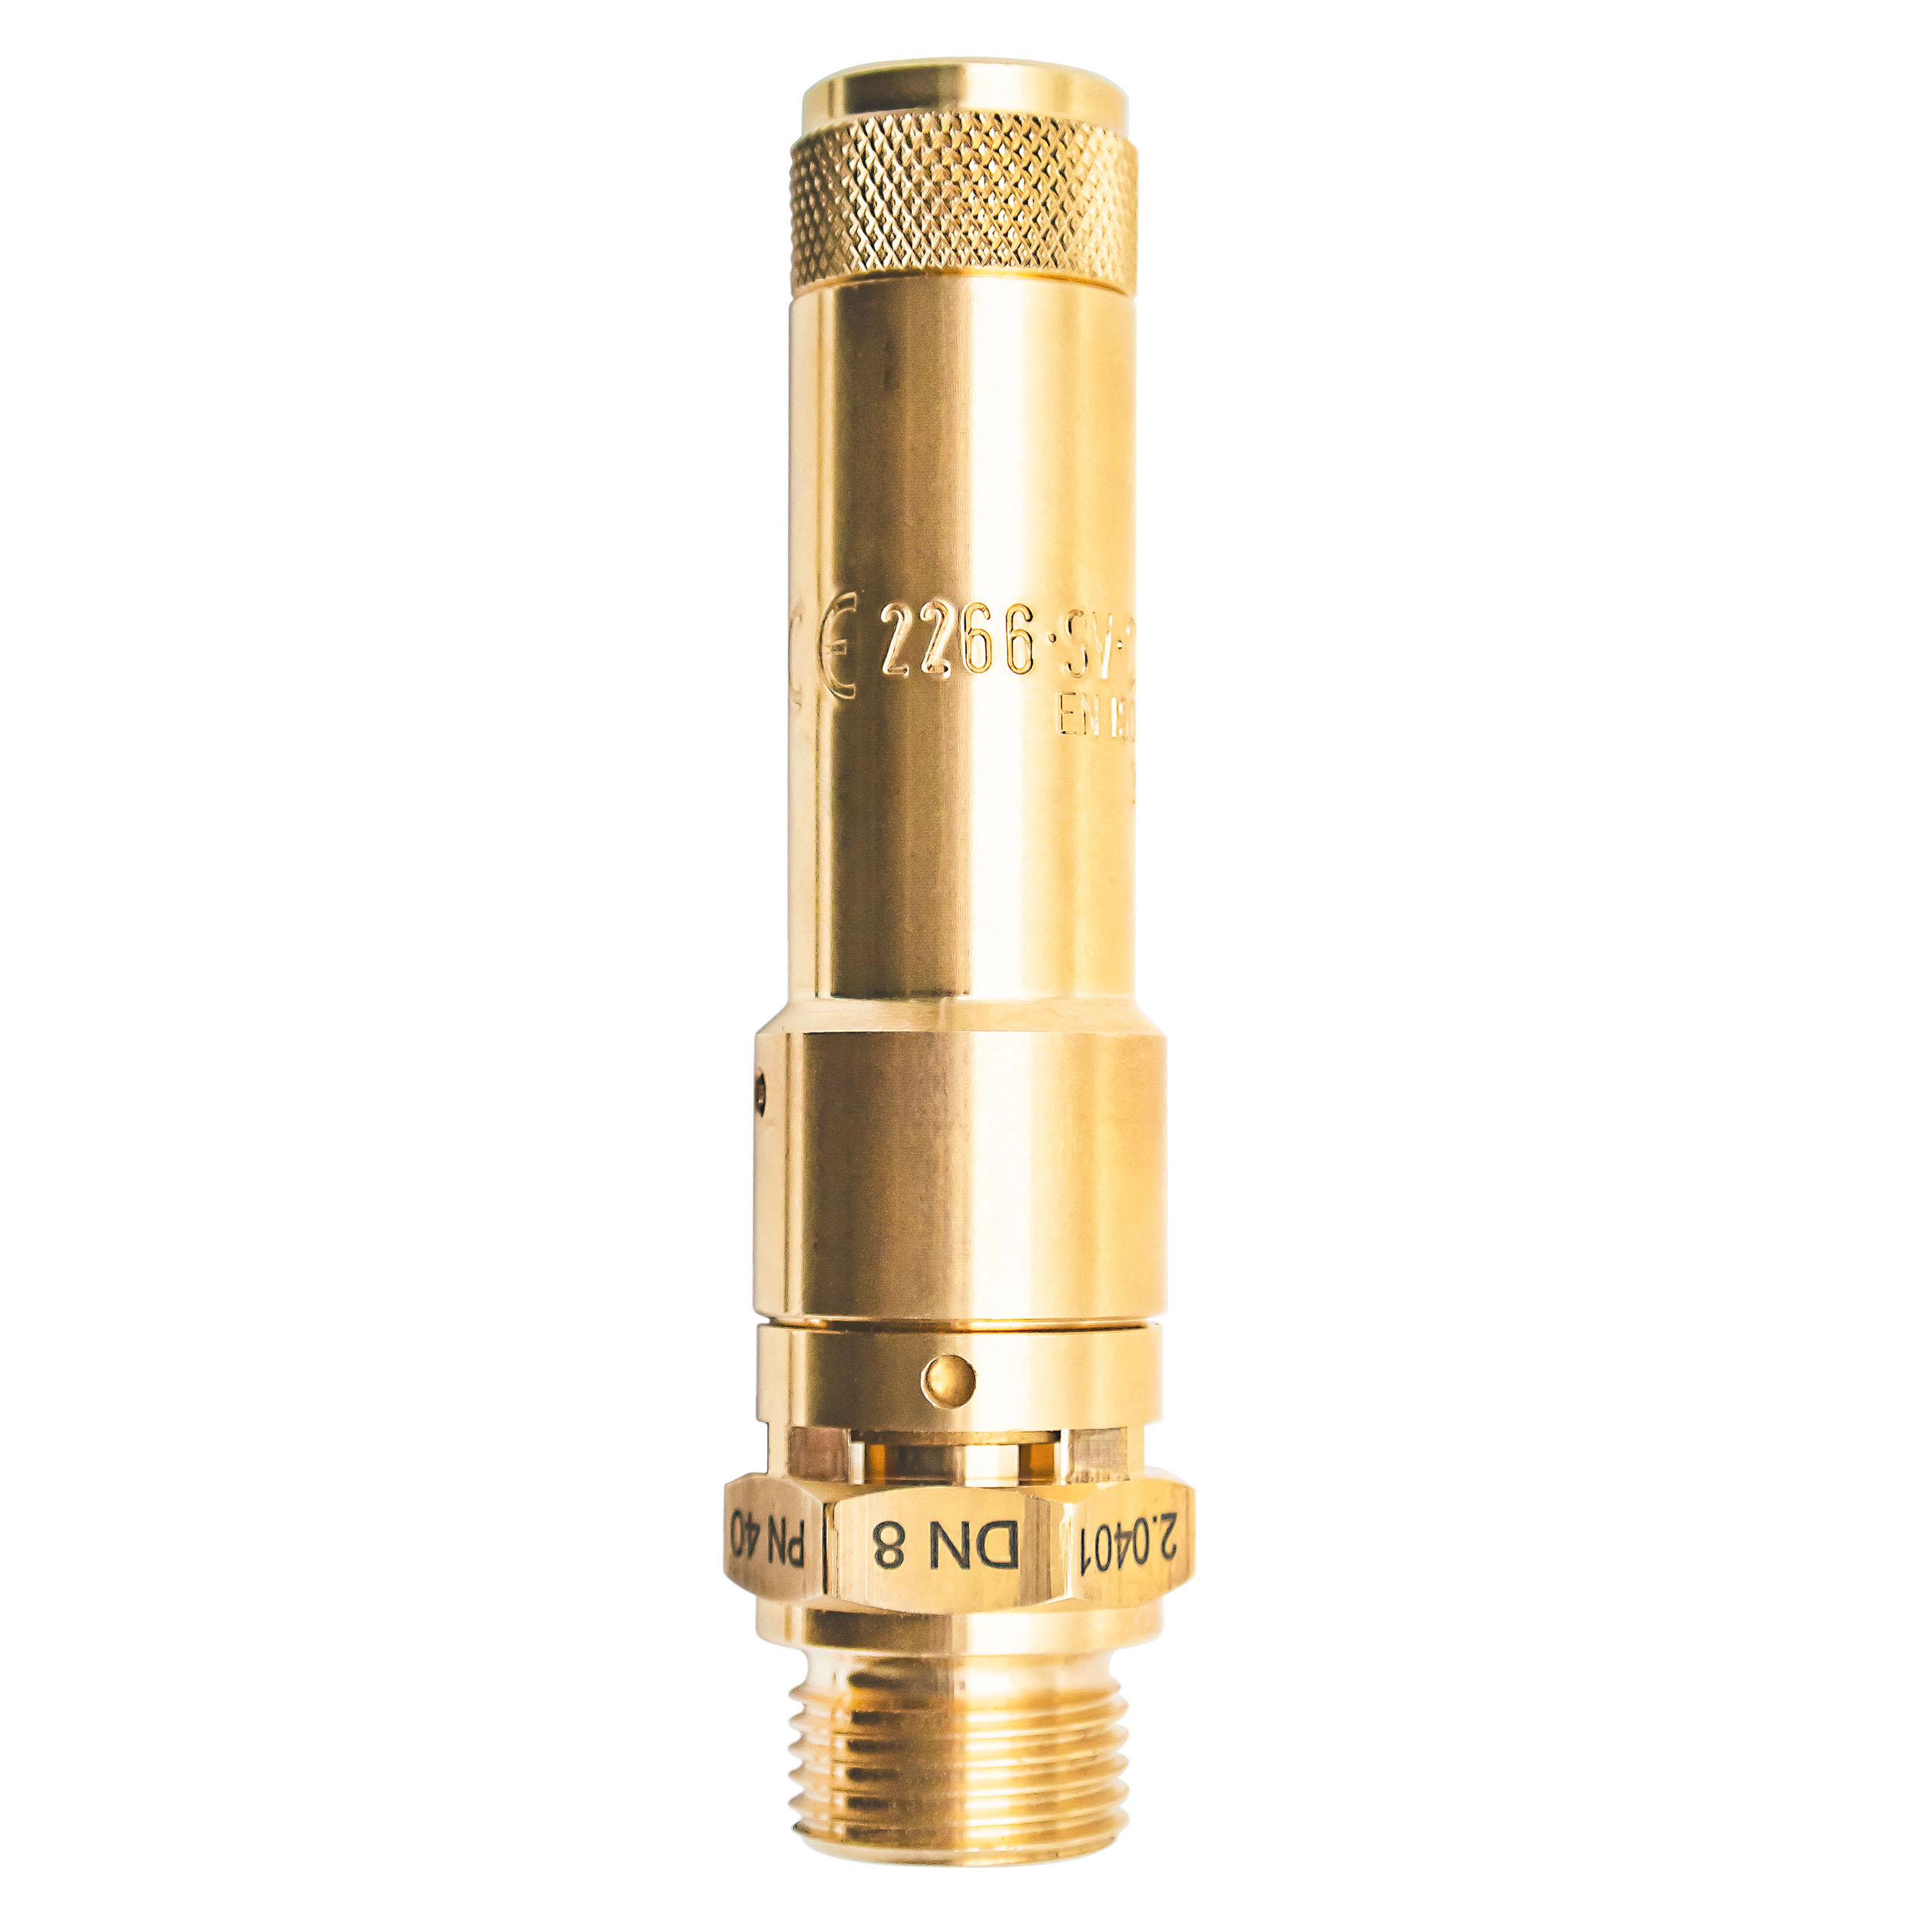 Savety valve component tested DN 8, G¼, set pressure: 10.8 bar (156,6 psi)